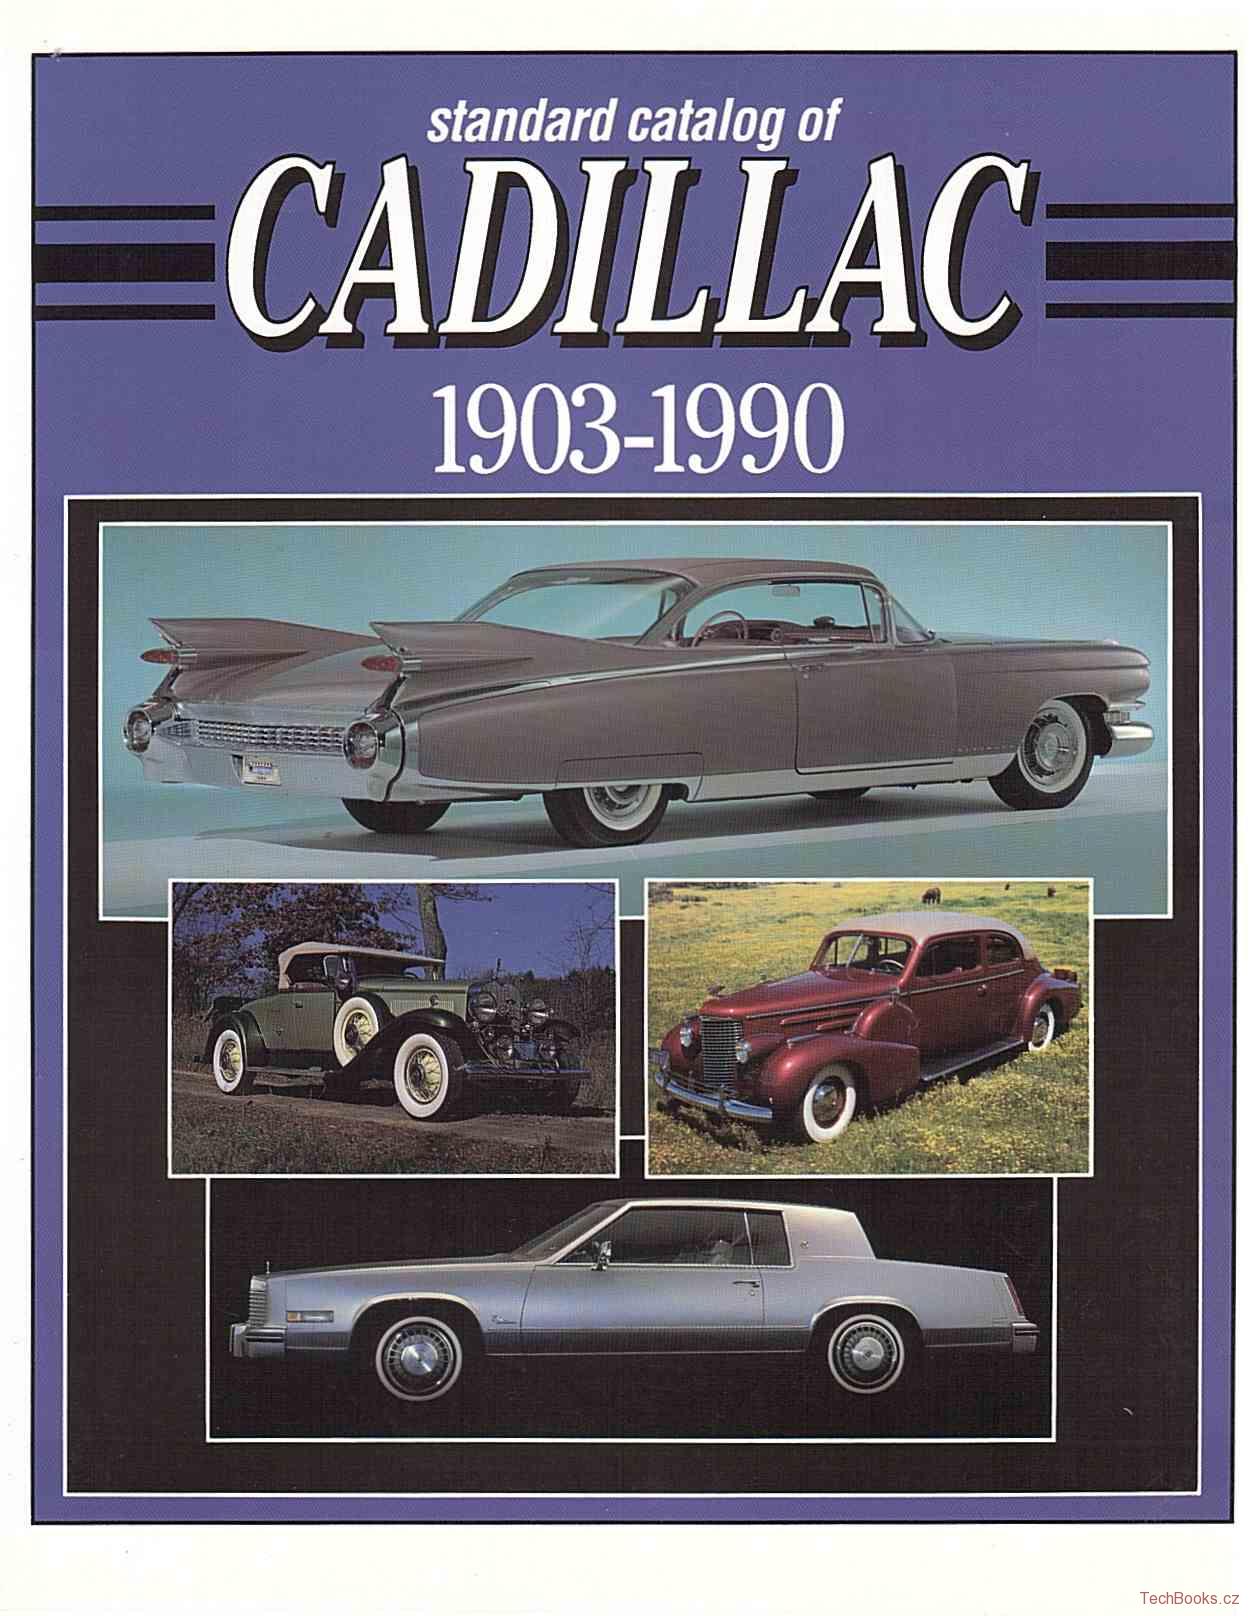 Standard Catalog of Cadillac 1903-1990